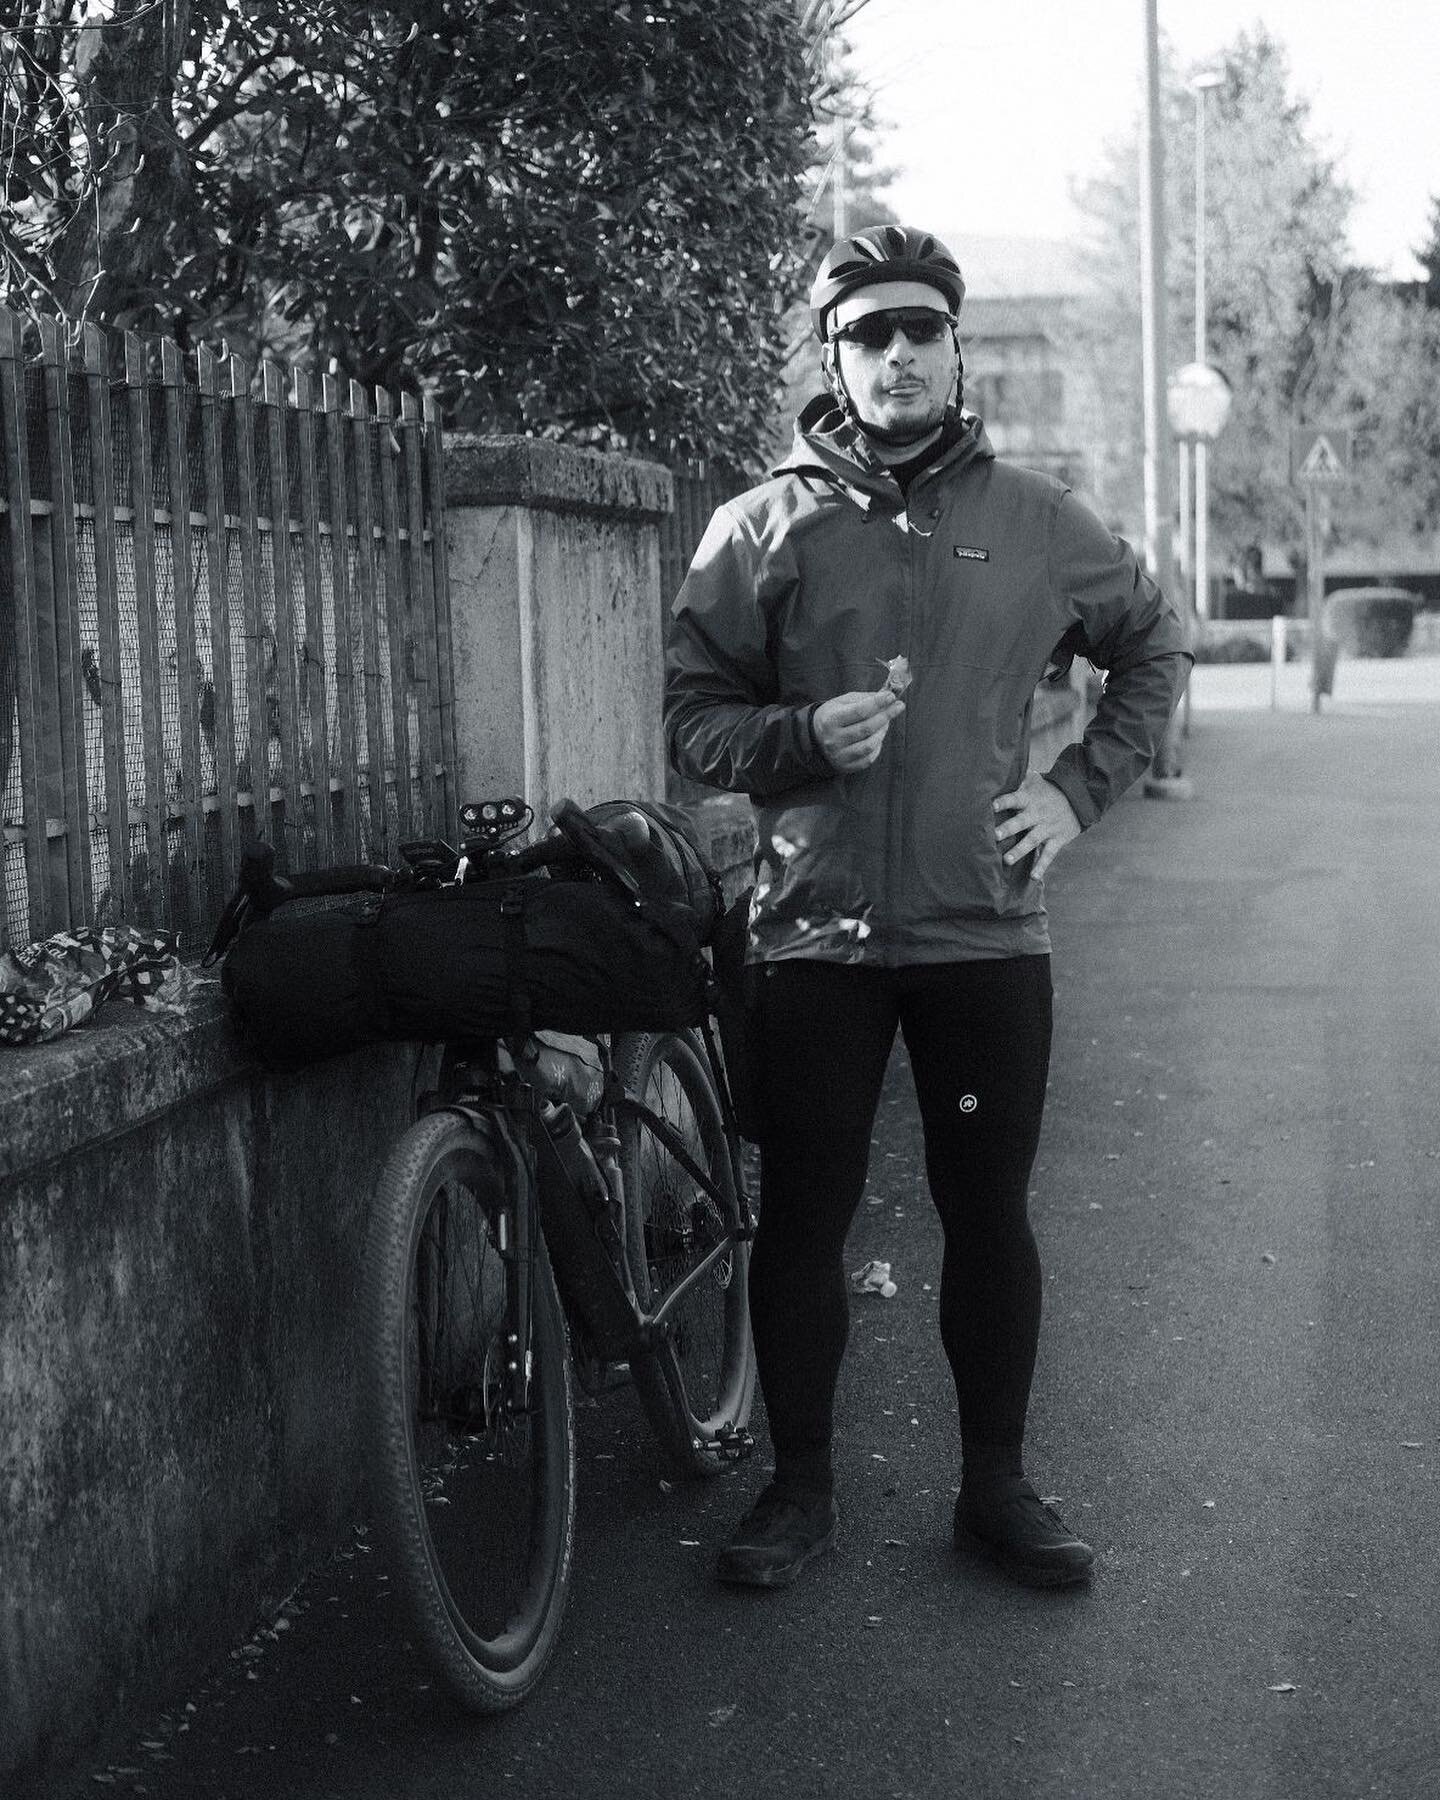 Bikepacking Italy Day 2

#photography #cyclingmemories #gravelbike #bikepacking #rennrad #tailfin #strava #wahoo #cycling #lifebehindbars #goneriding #rideyourbike #fromwhereiride #bikeporn #cyclinglife #outsideisfree #biketour #bmcurs #klite #sram #